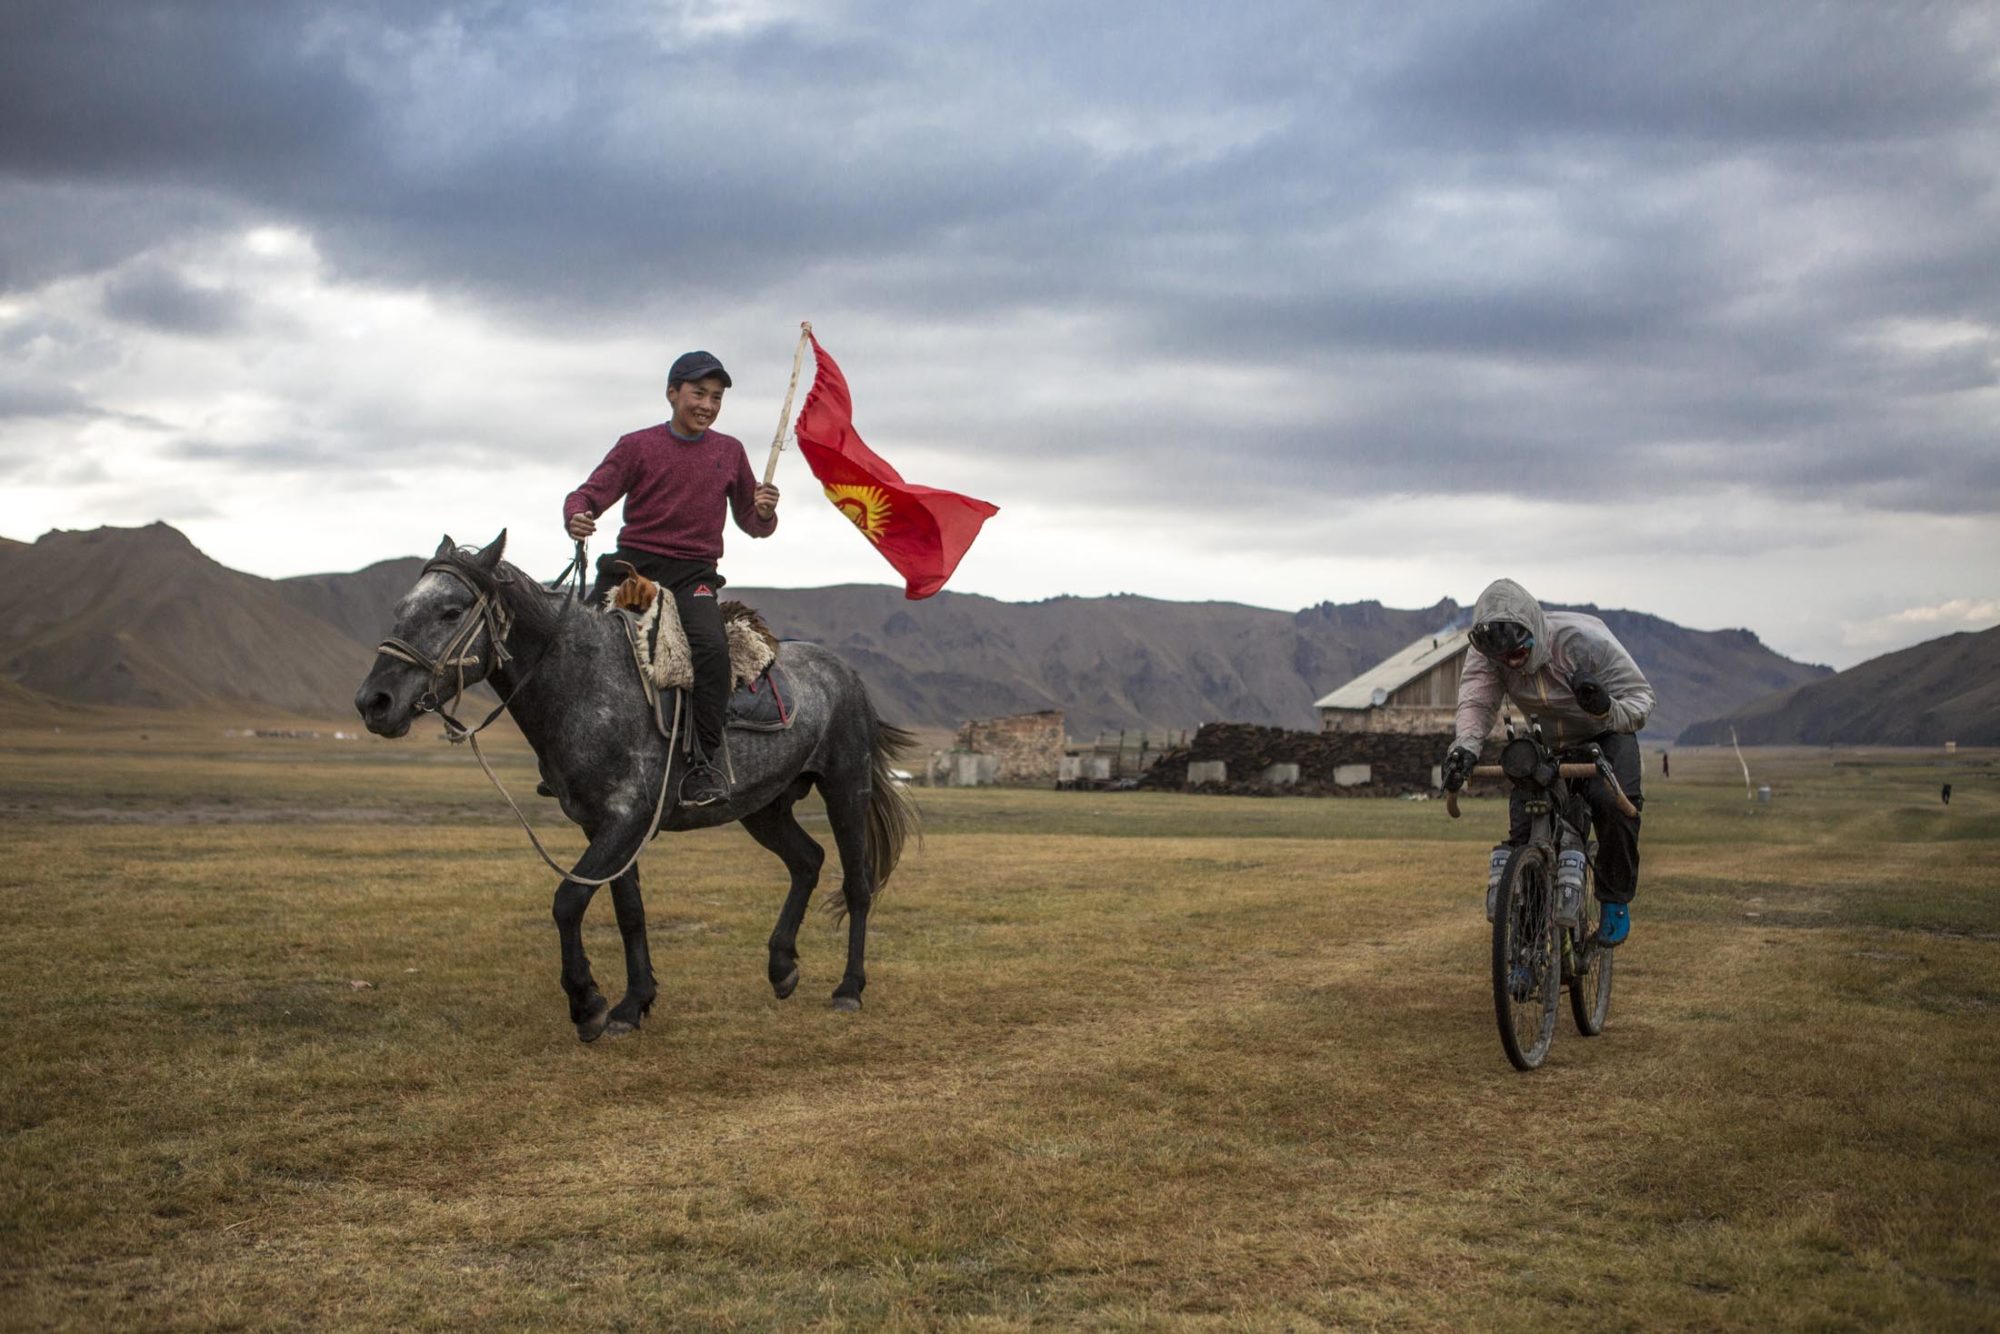 Jay Petervary, The Silk Road Mountain Race